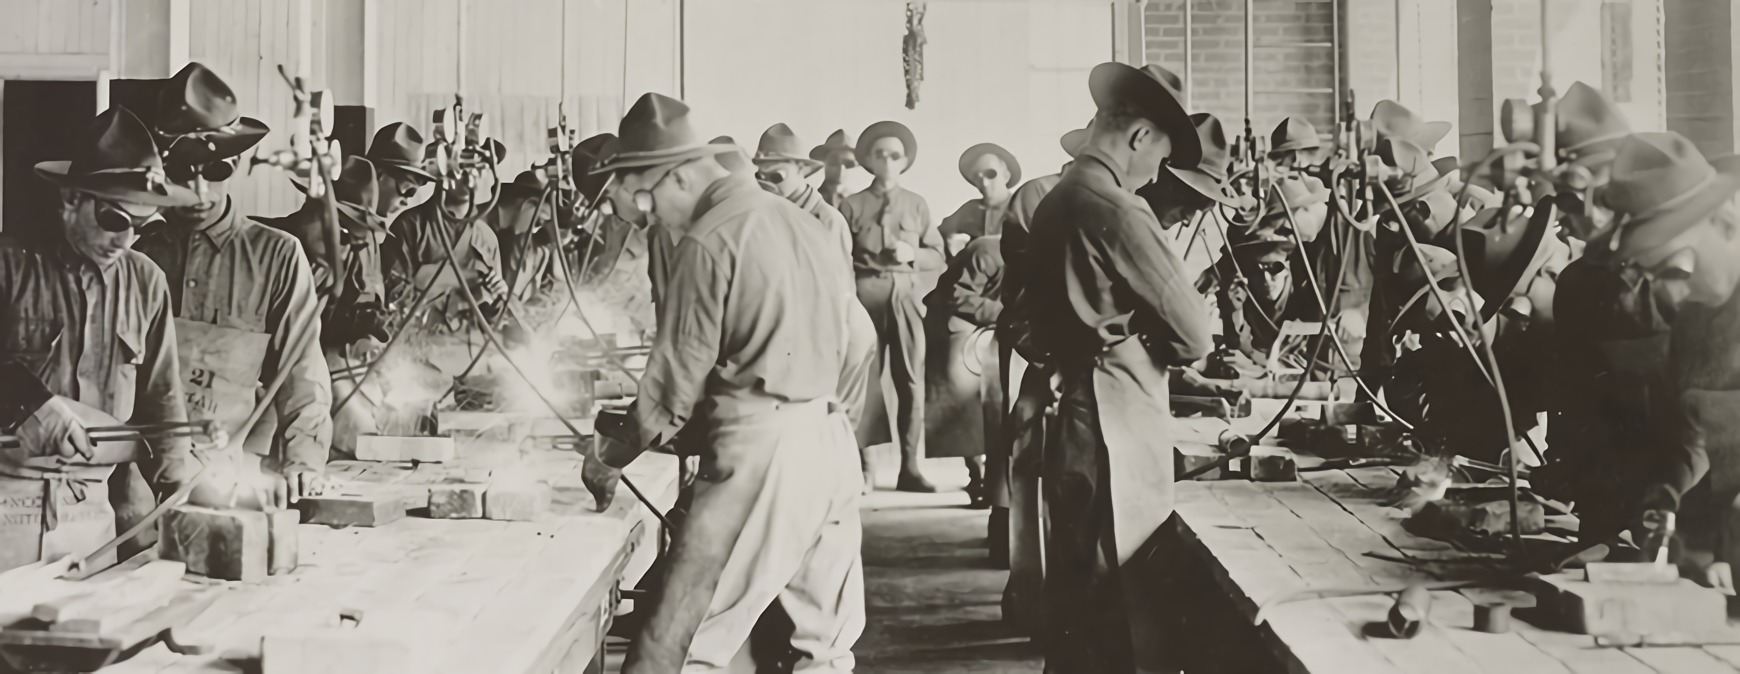 soldiers recieving welding training